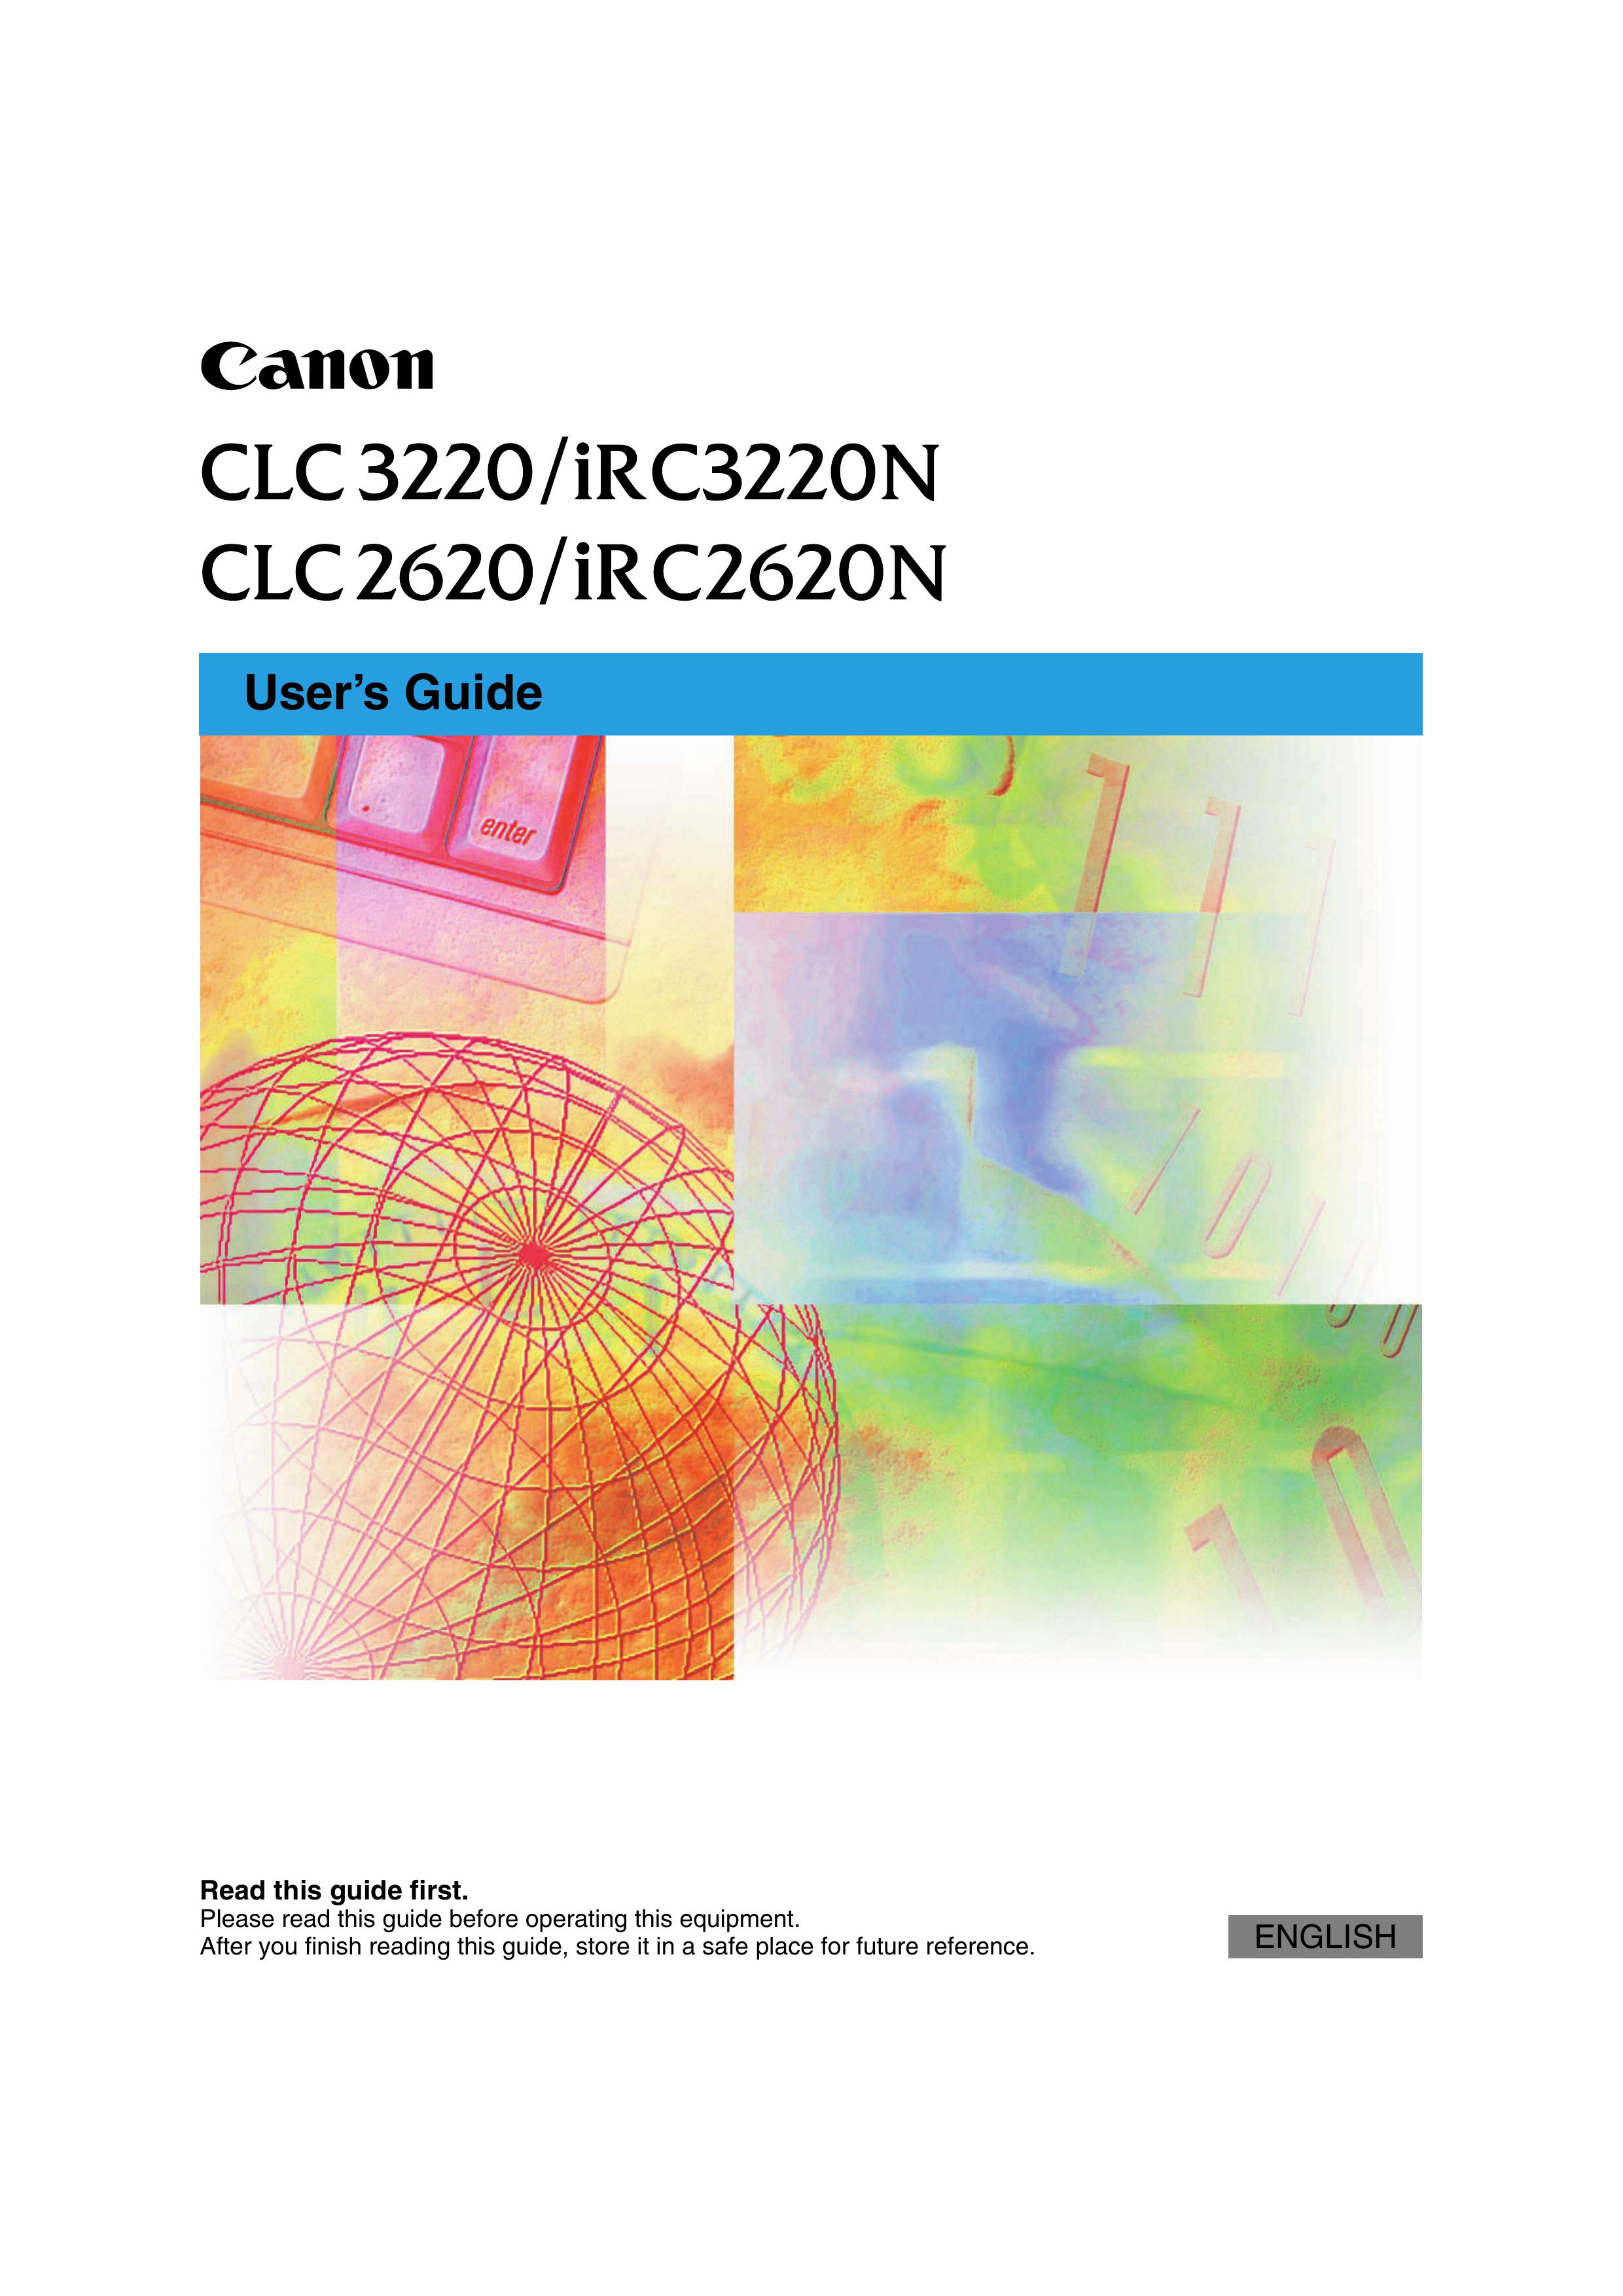 Canon IR C2620N Photo Printer User Manual